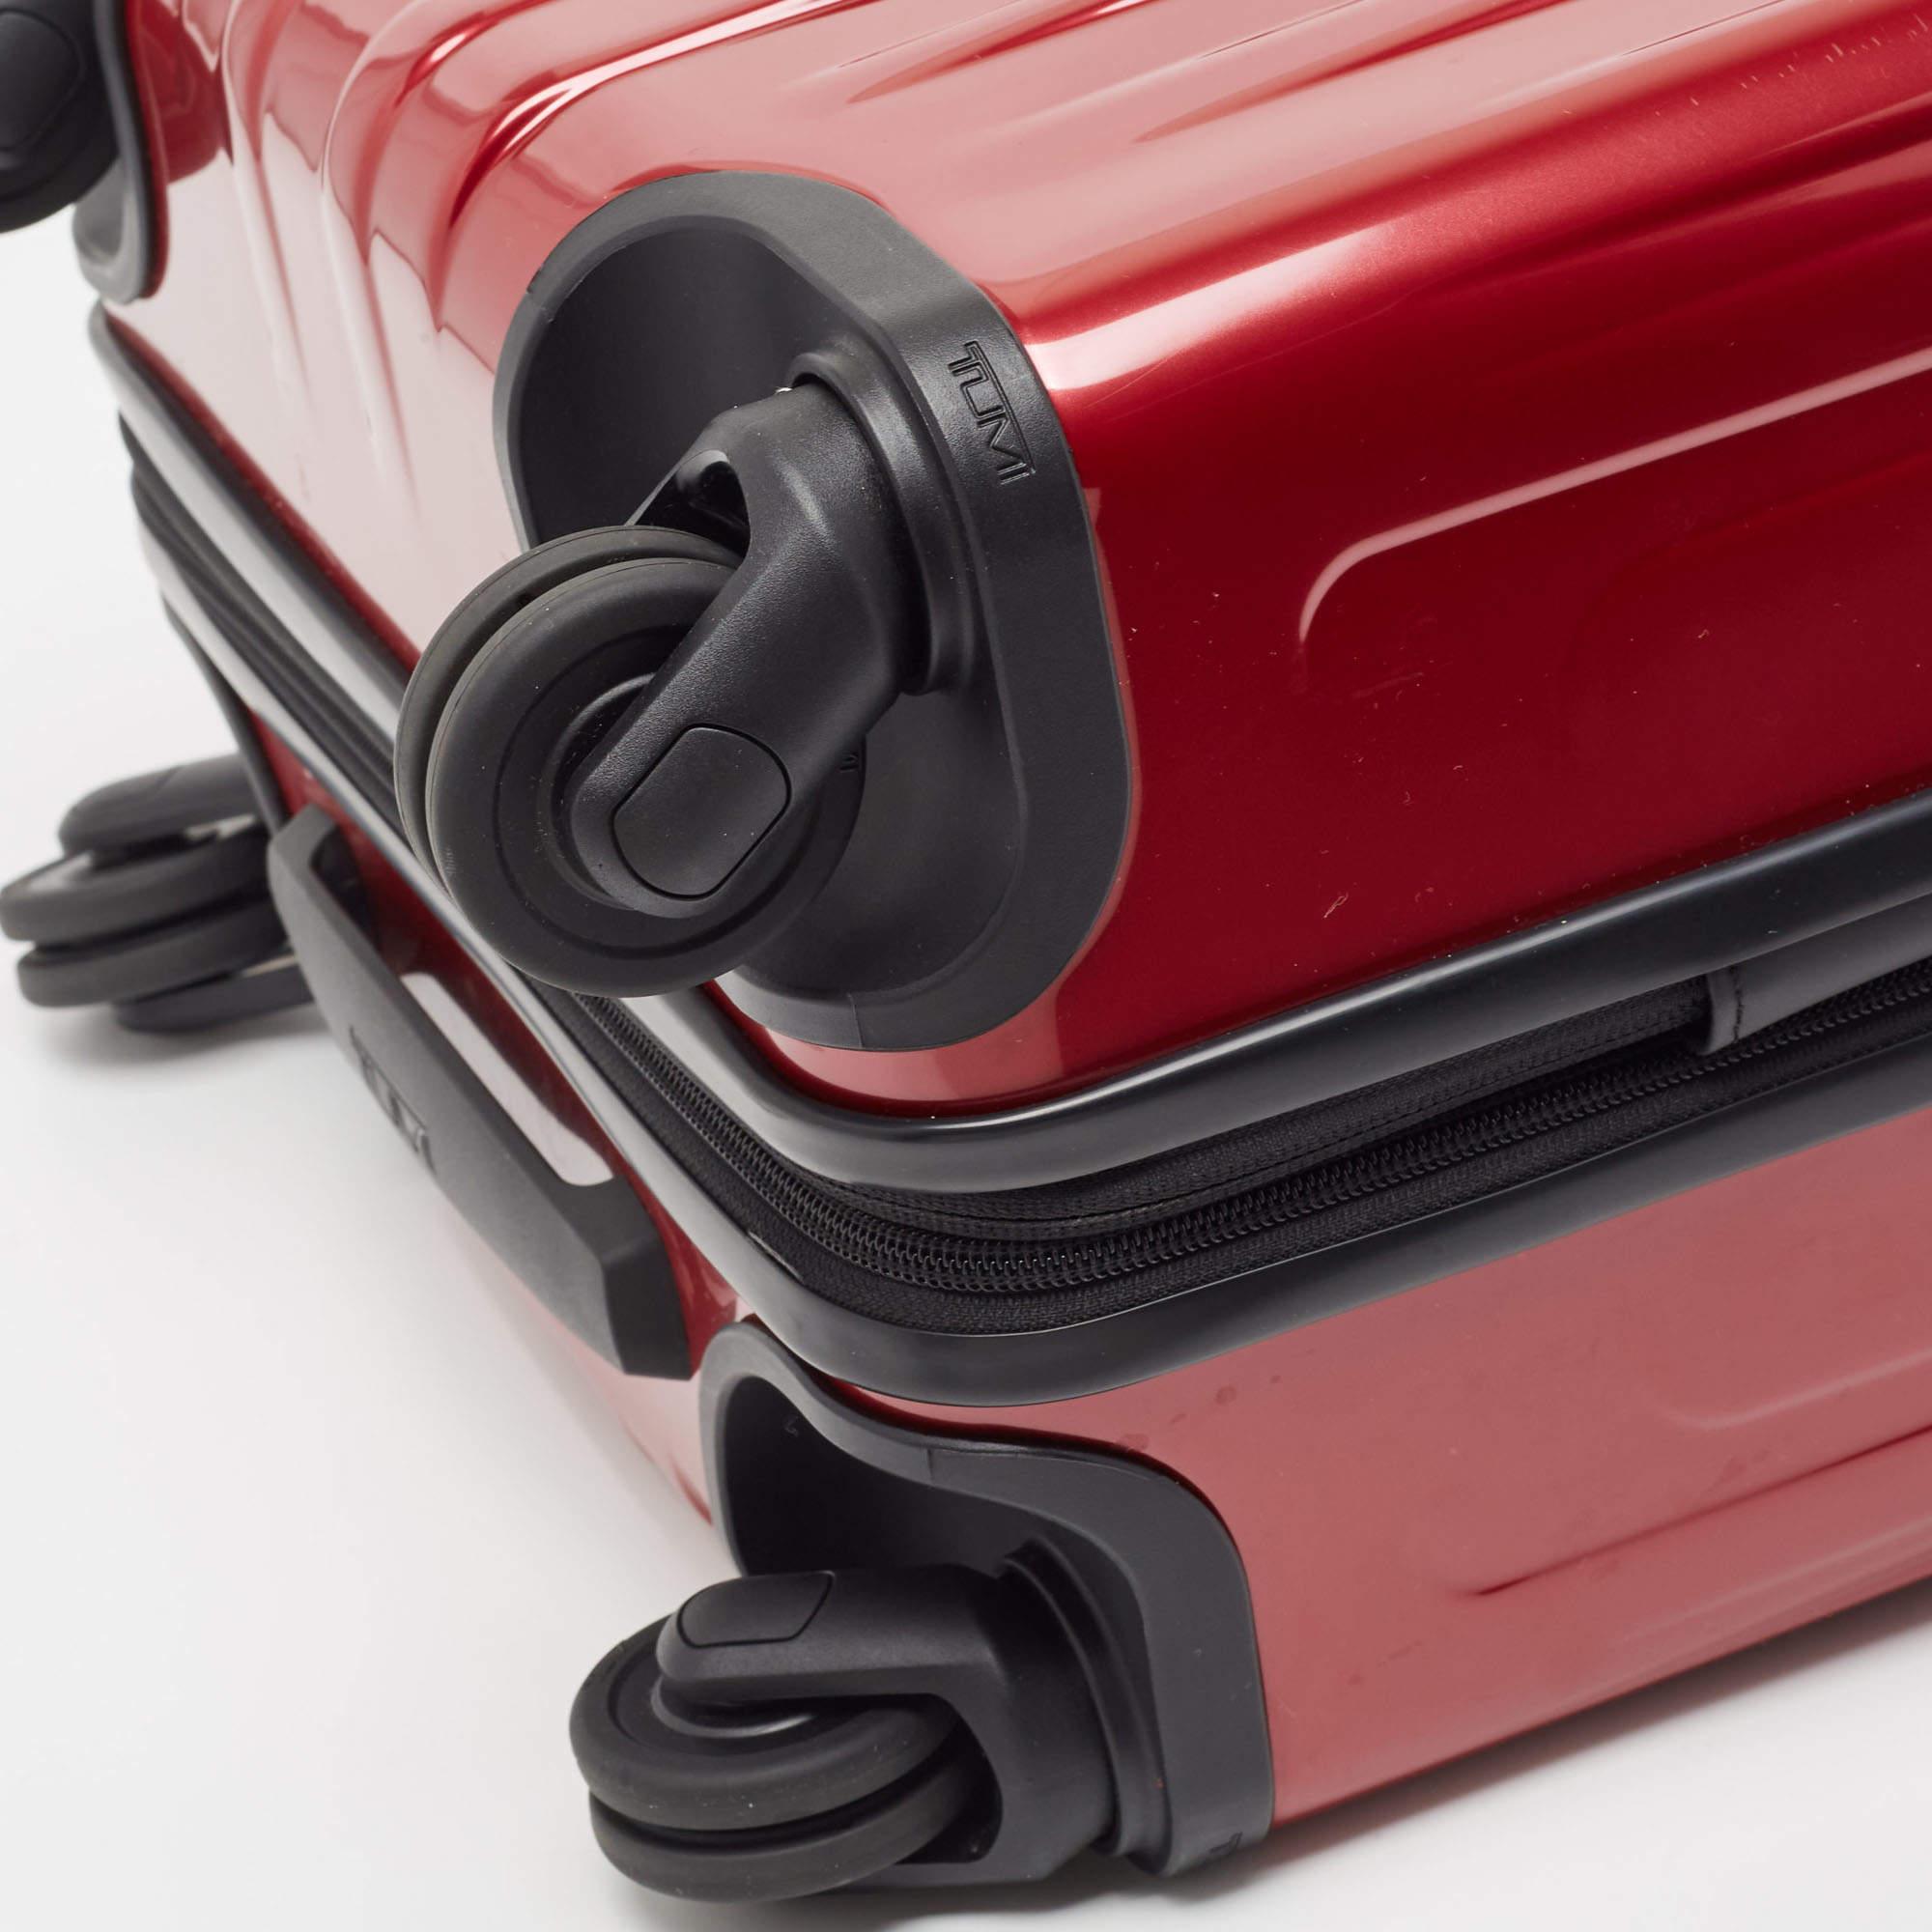 TUMI Rote 4 Rädern V4 International Expandable Carry On Luggage, ausziehbar im Angebot 2